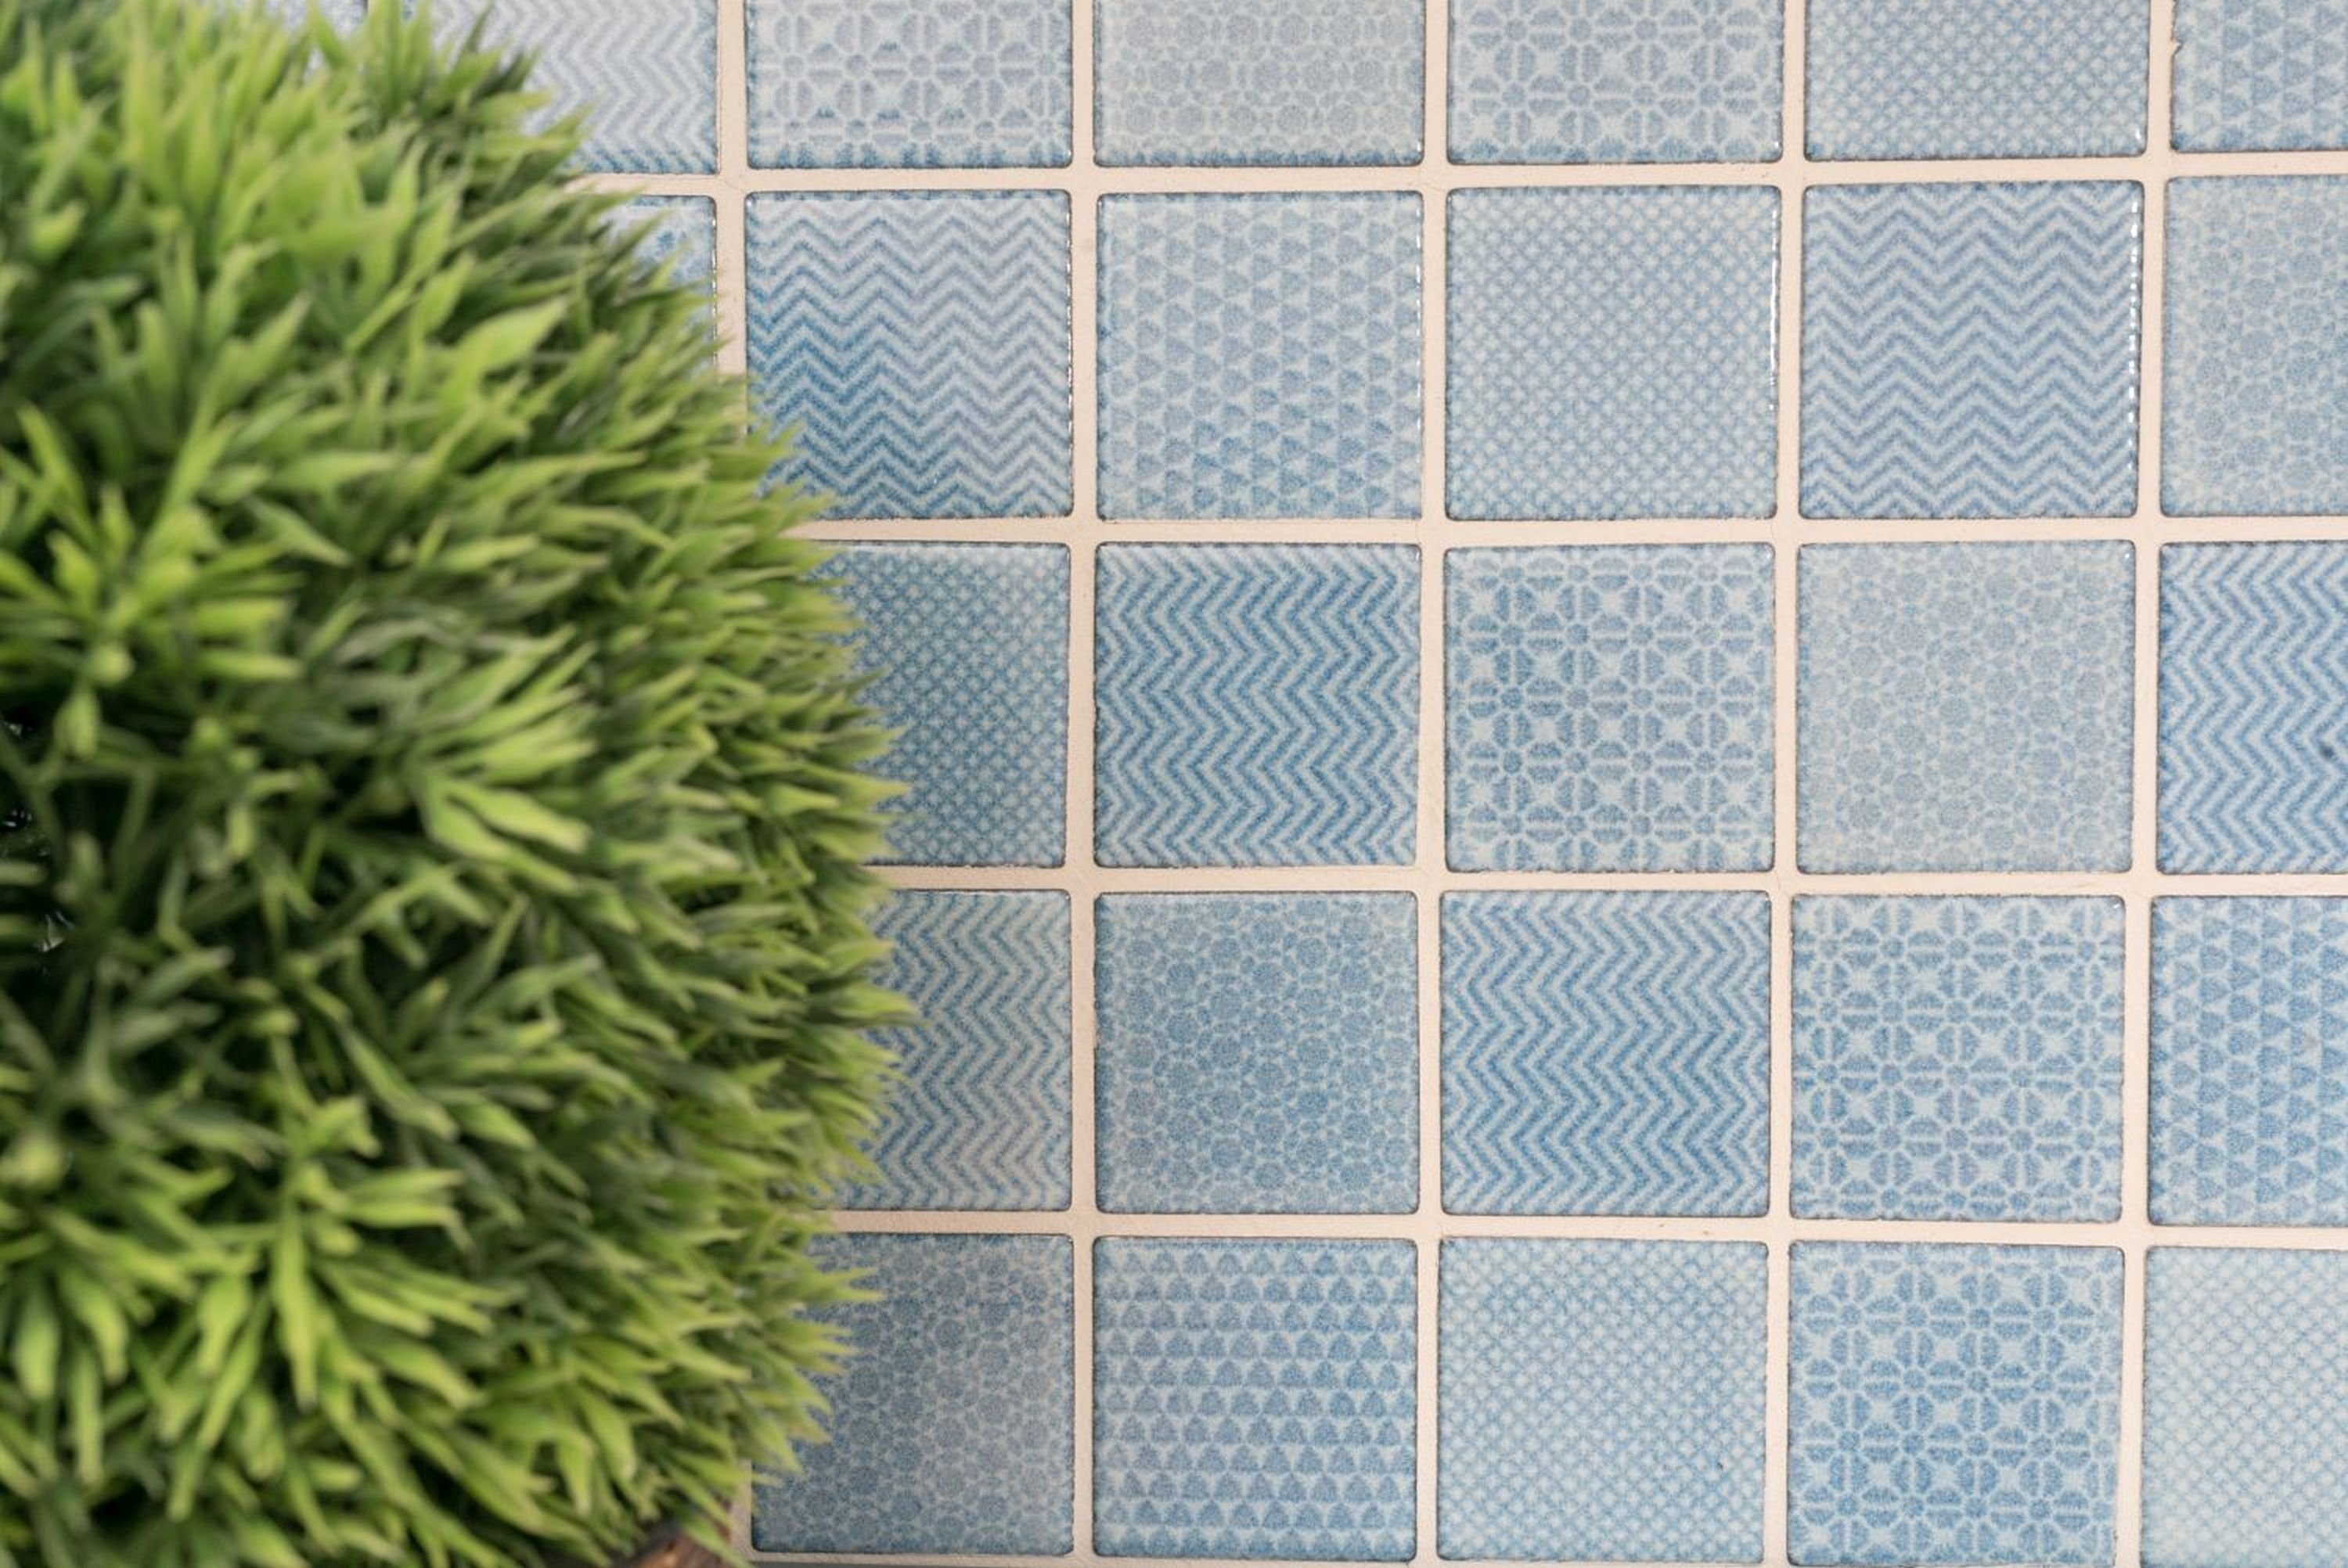 Mosaikfliesen Poolblau Dusch Mosaik Fliese Bad BAD Keramik blau Fliesenspiegel Mosani